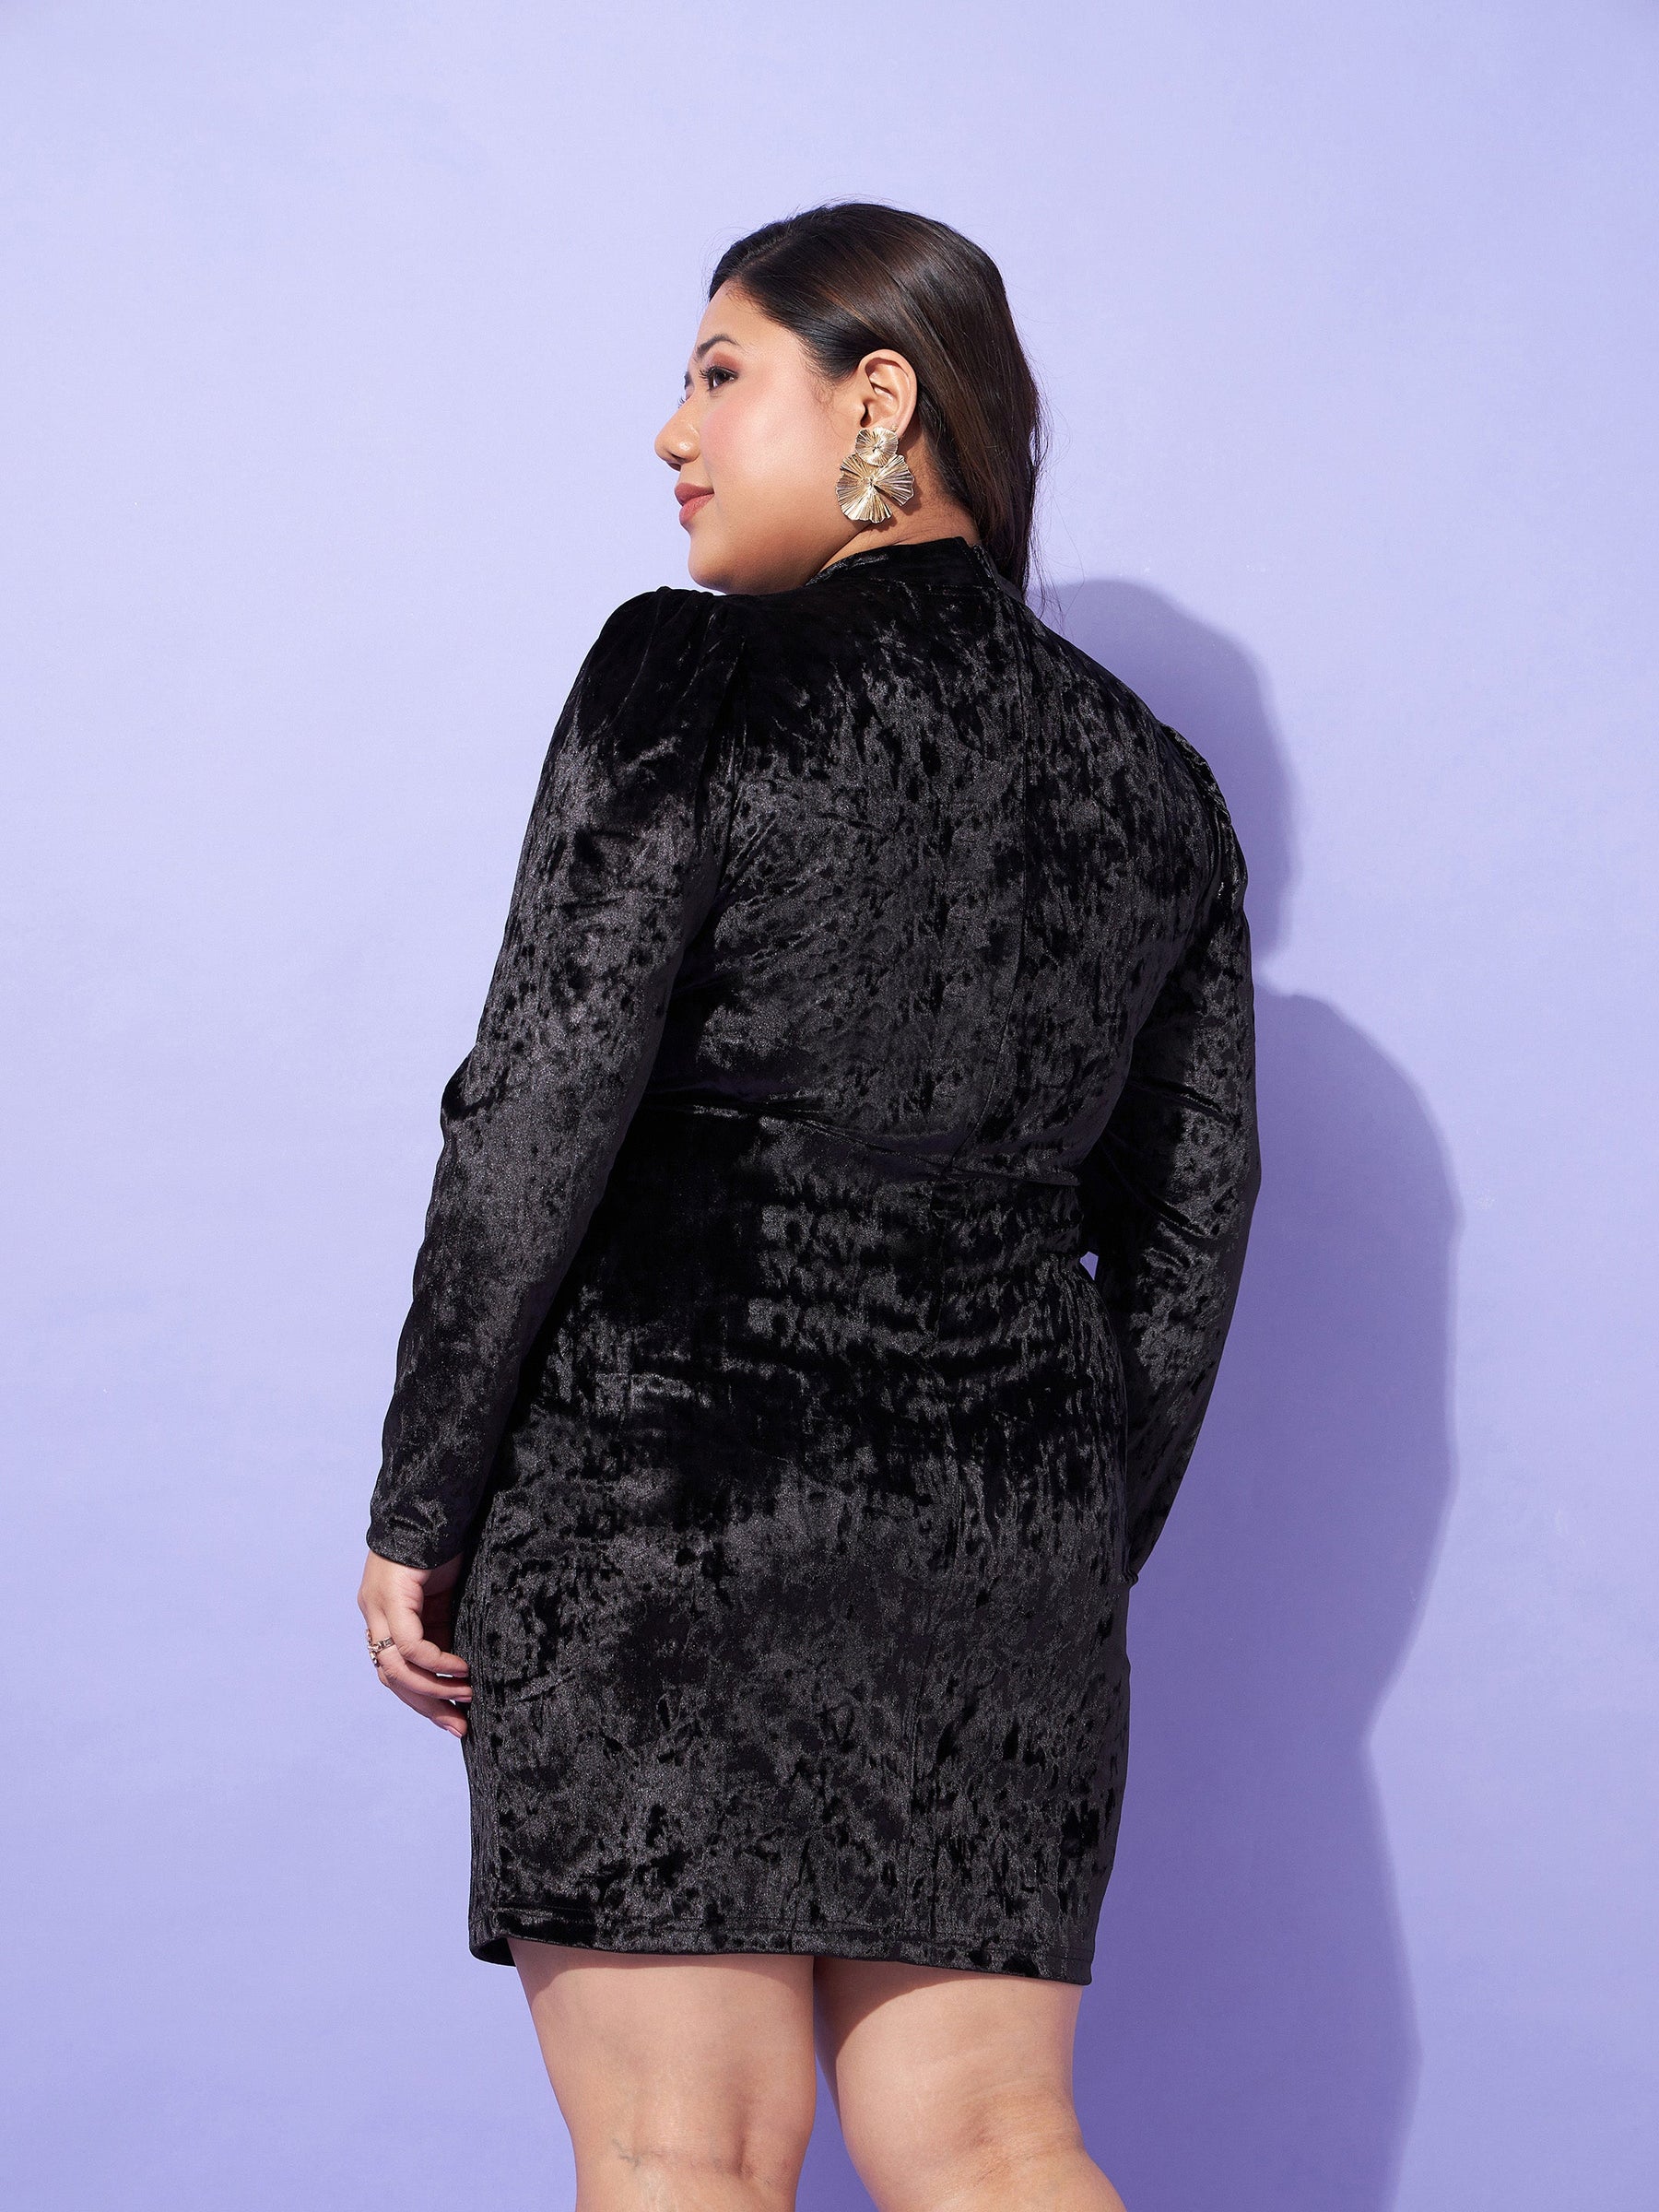 Black Velvet Bodycon Dress at Rs 170 in Indore